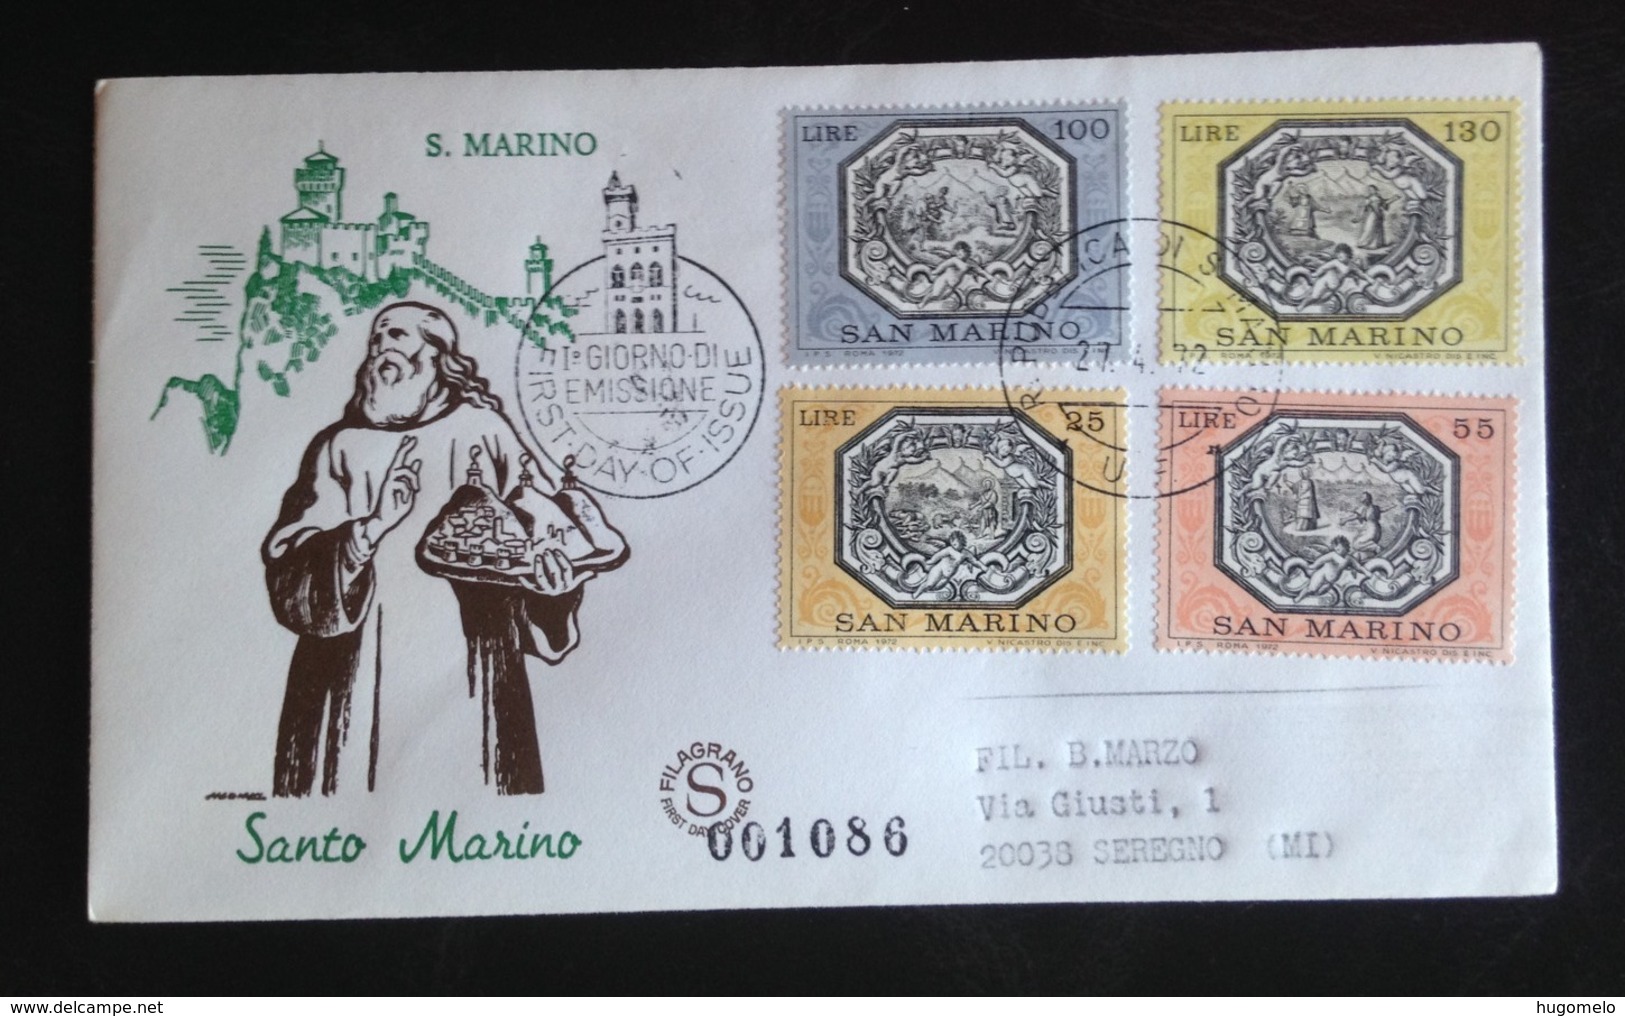 San Marino, Circulated FDC, « SANTO MARINO », 1972 - FDC